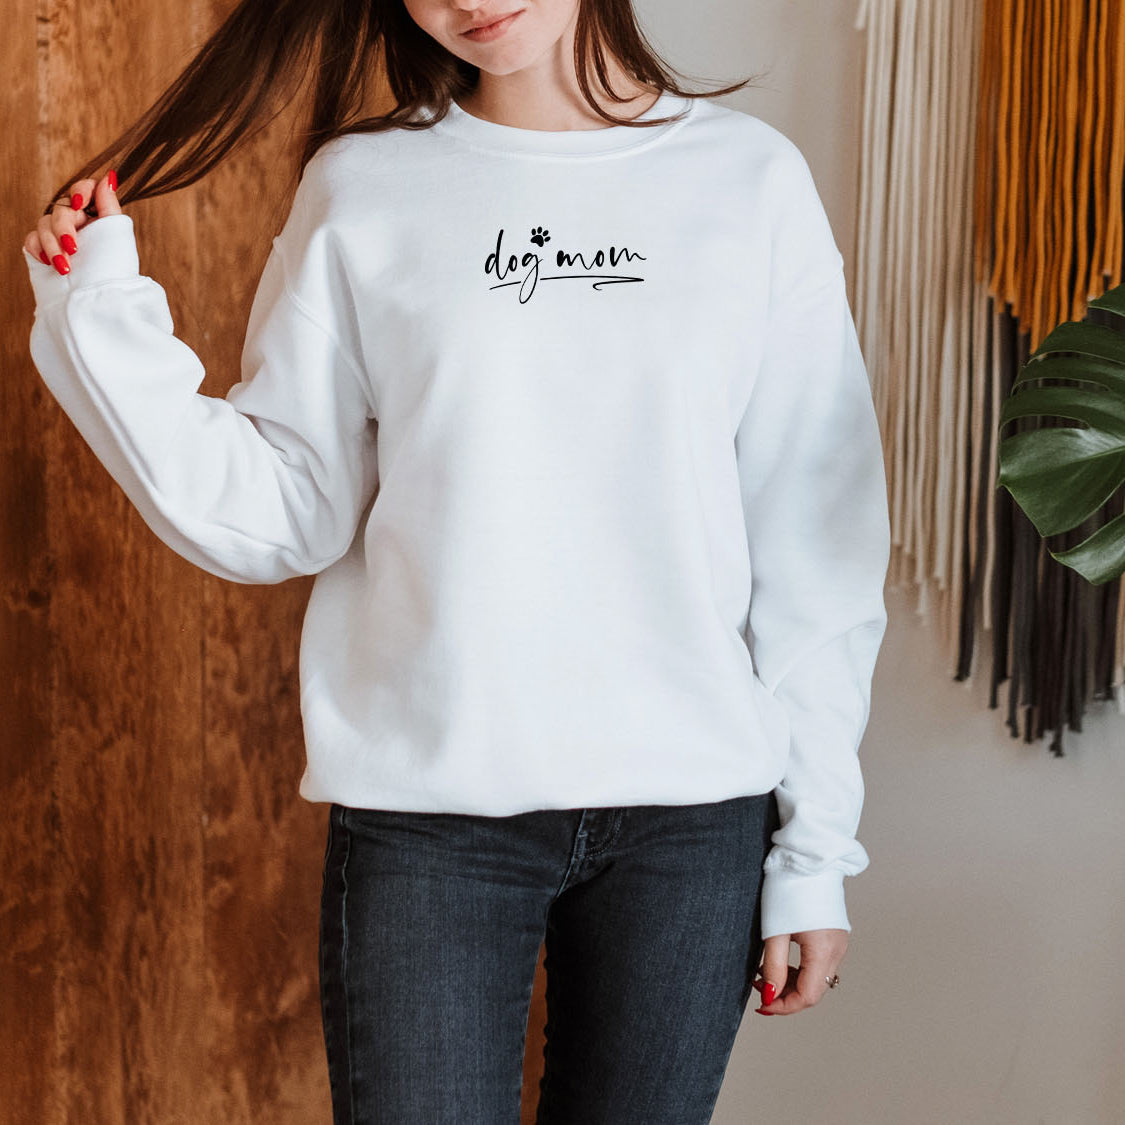 Dog Mom Small Letters Sweatshirt - Fun Pet Love Minimal Design Printed Sweatshirt